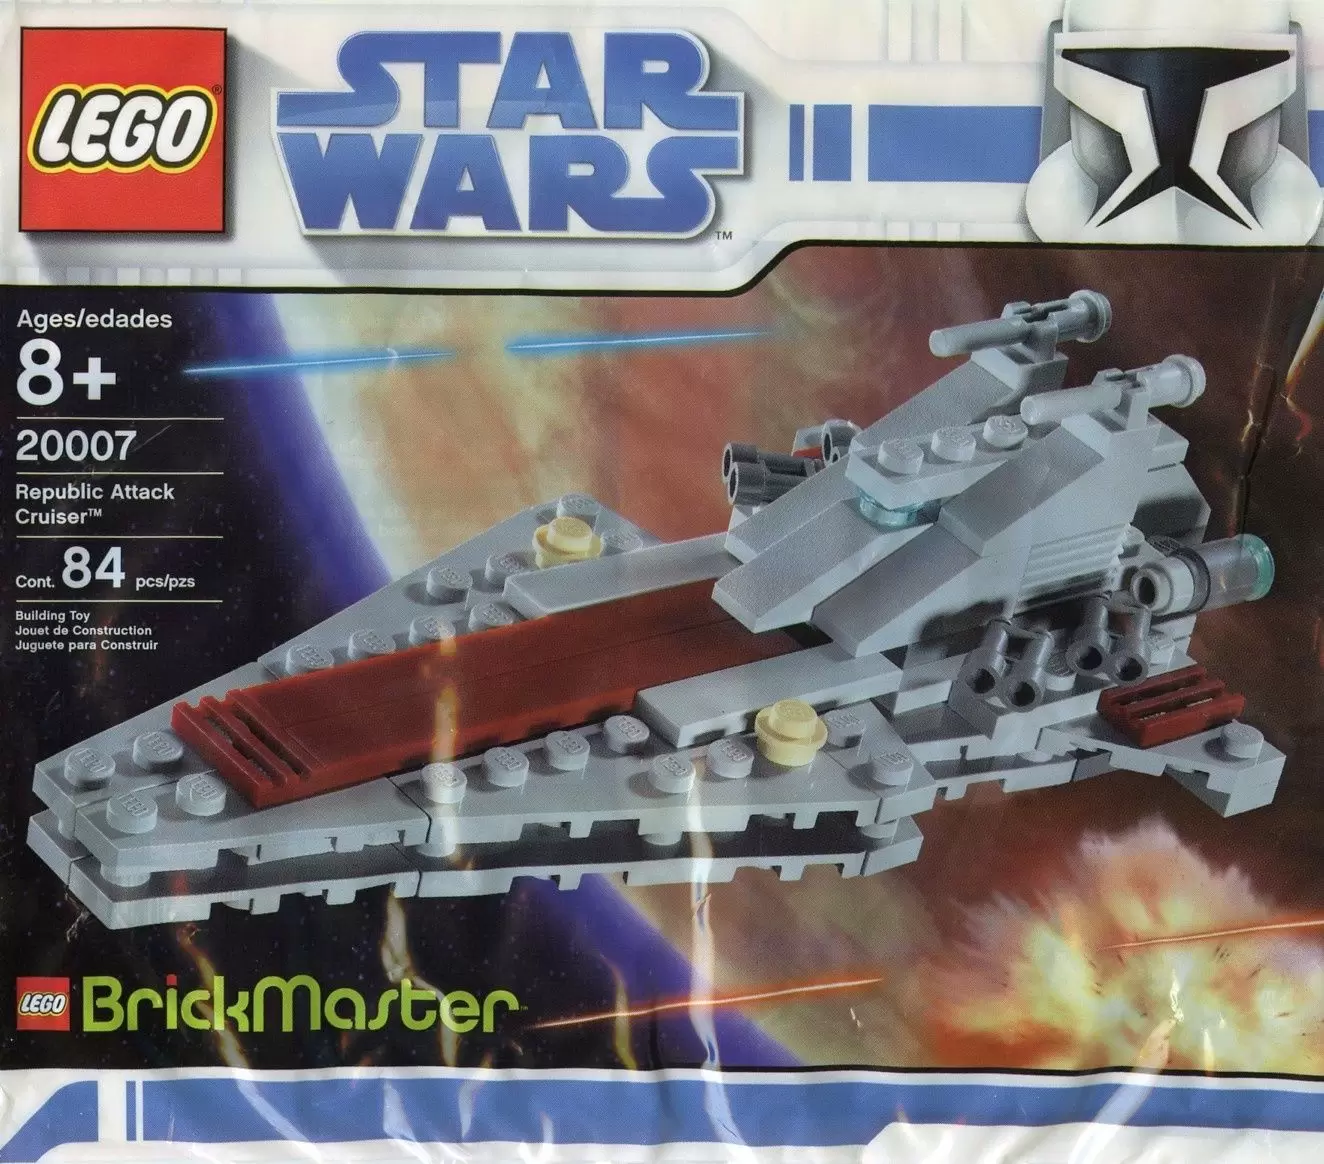 LEGO Star Wars - Republic Attack Cruiser